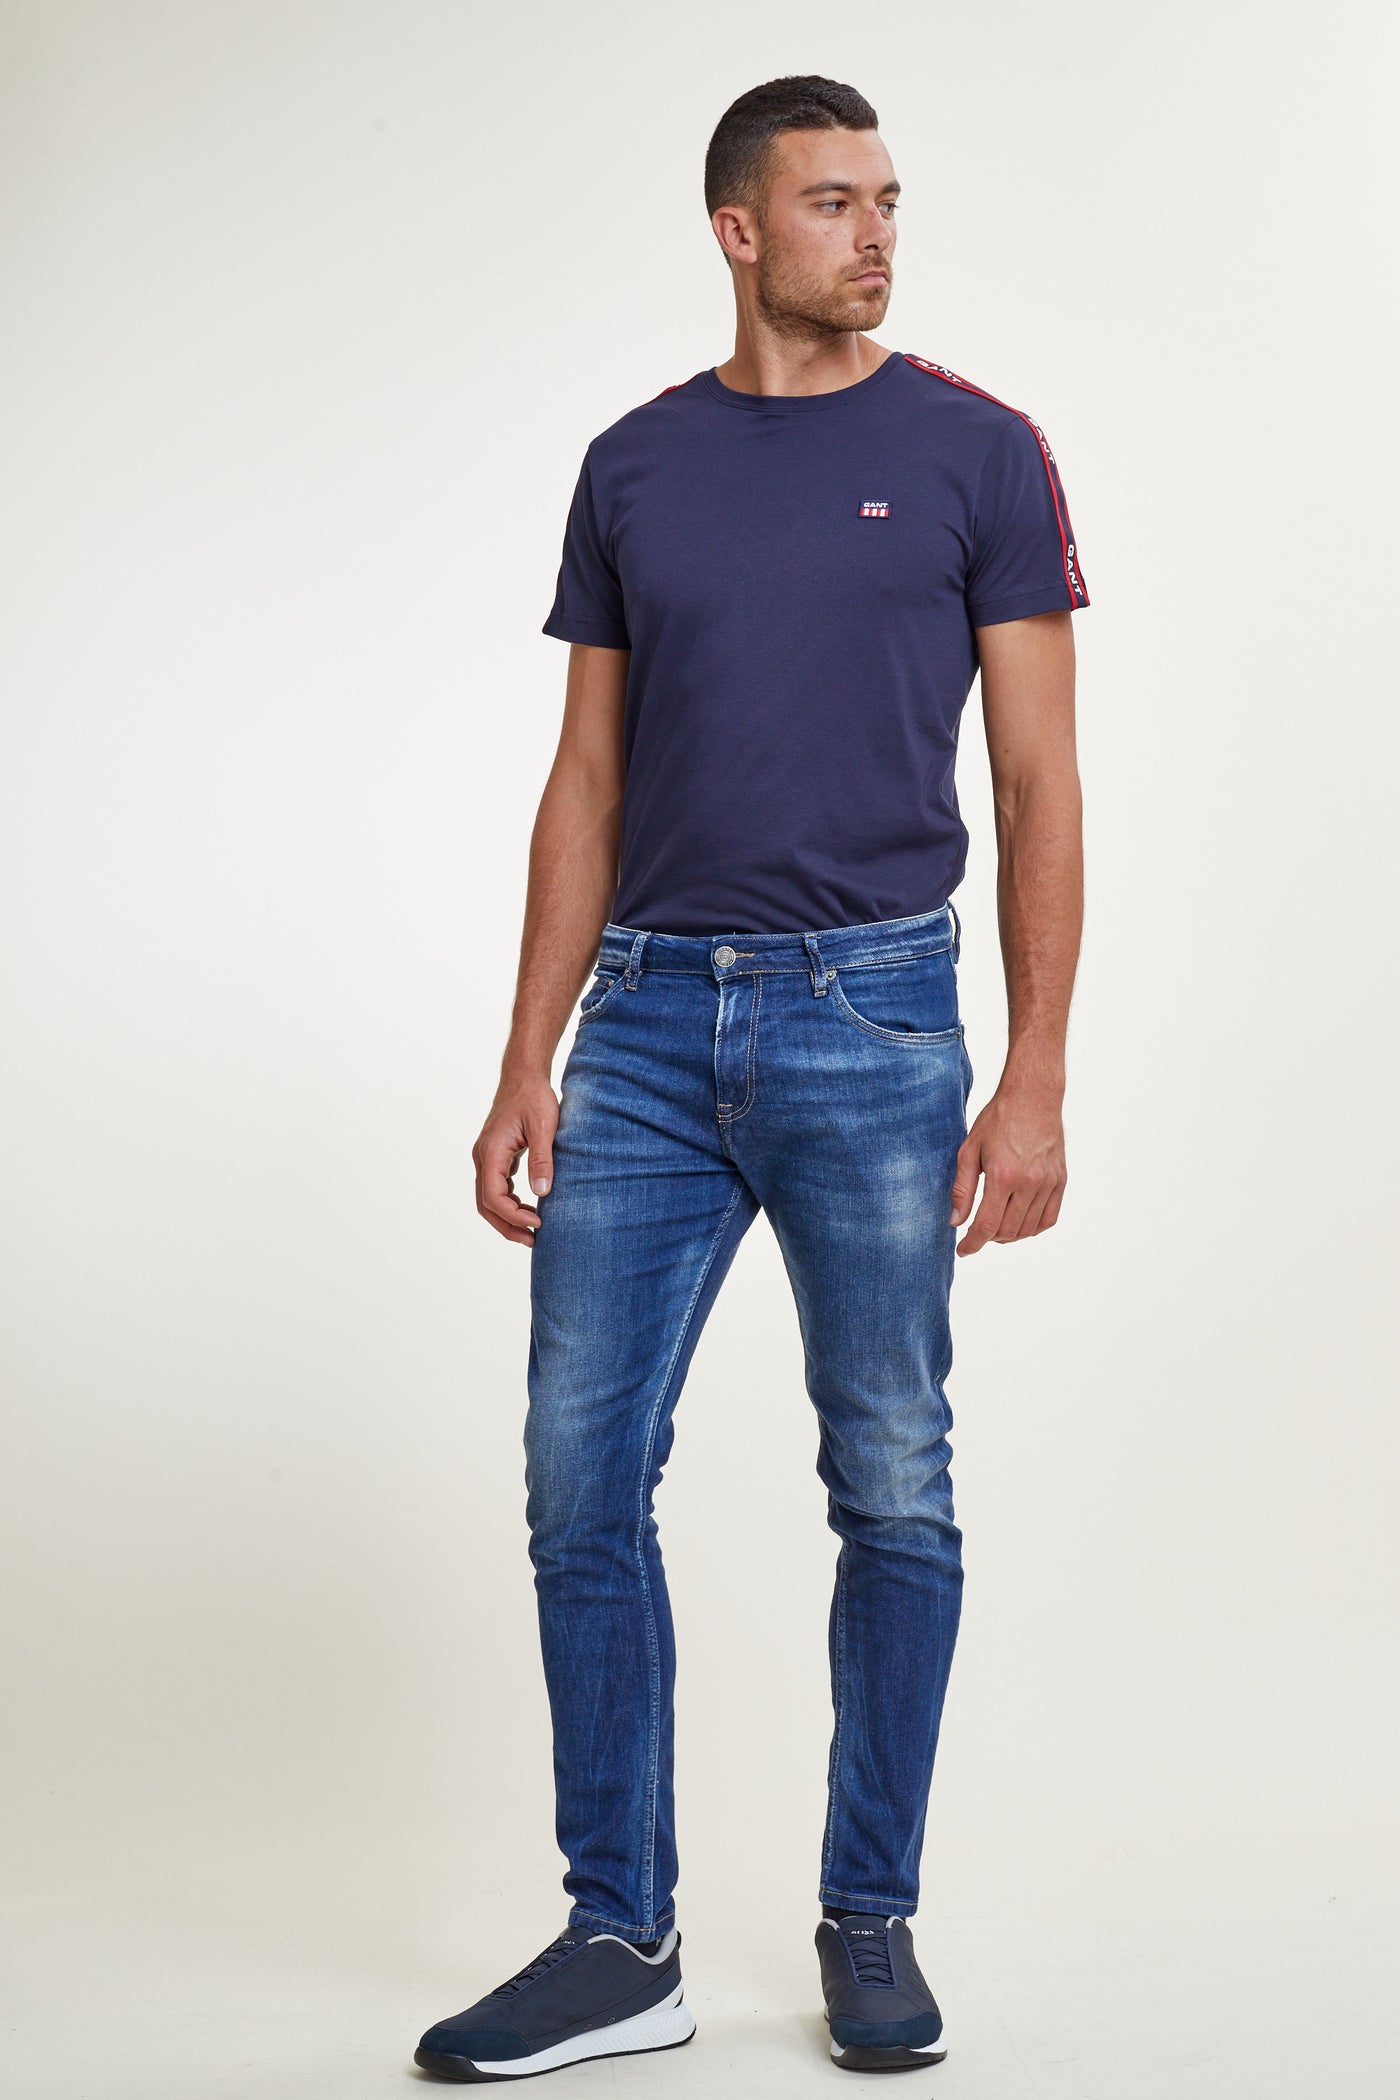 מכנס ג'ינס סלים 896 בצבע כחול